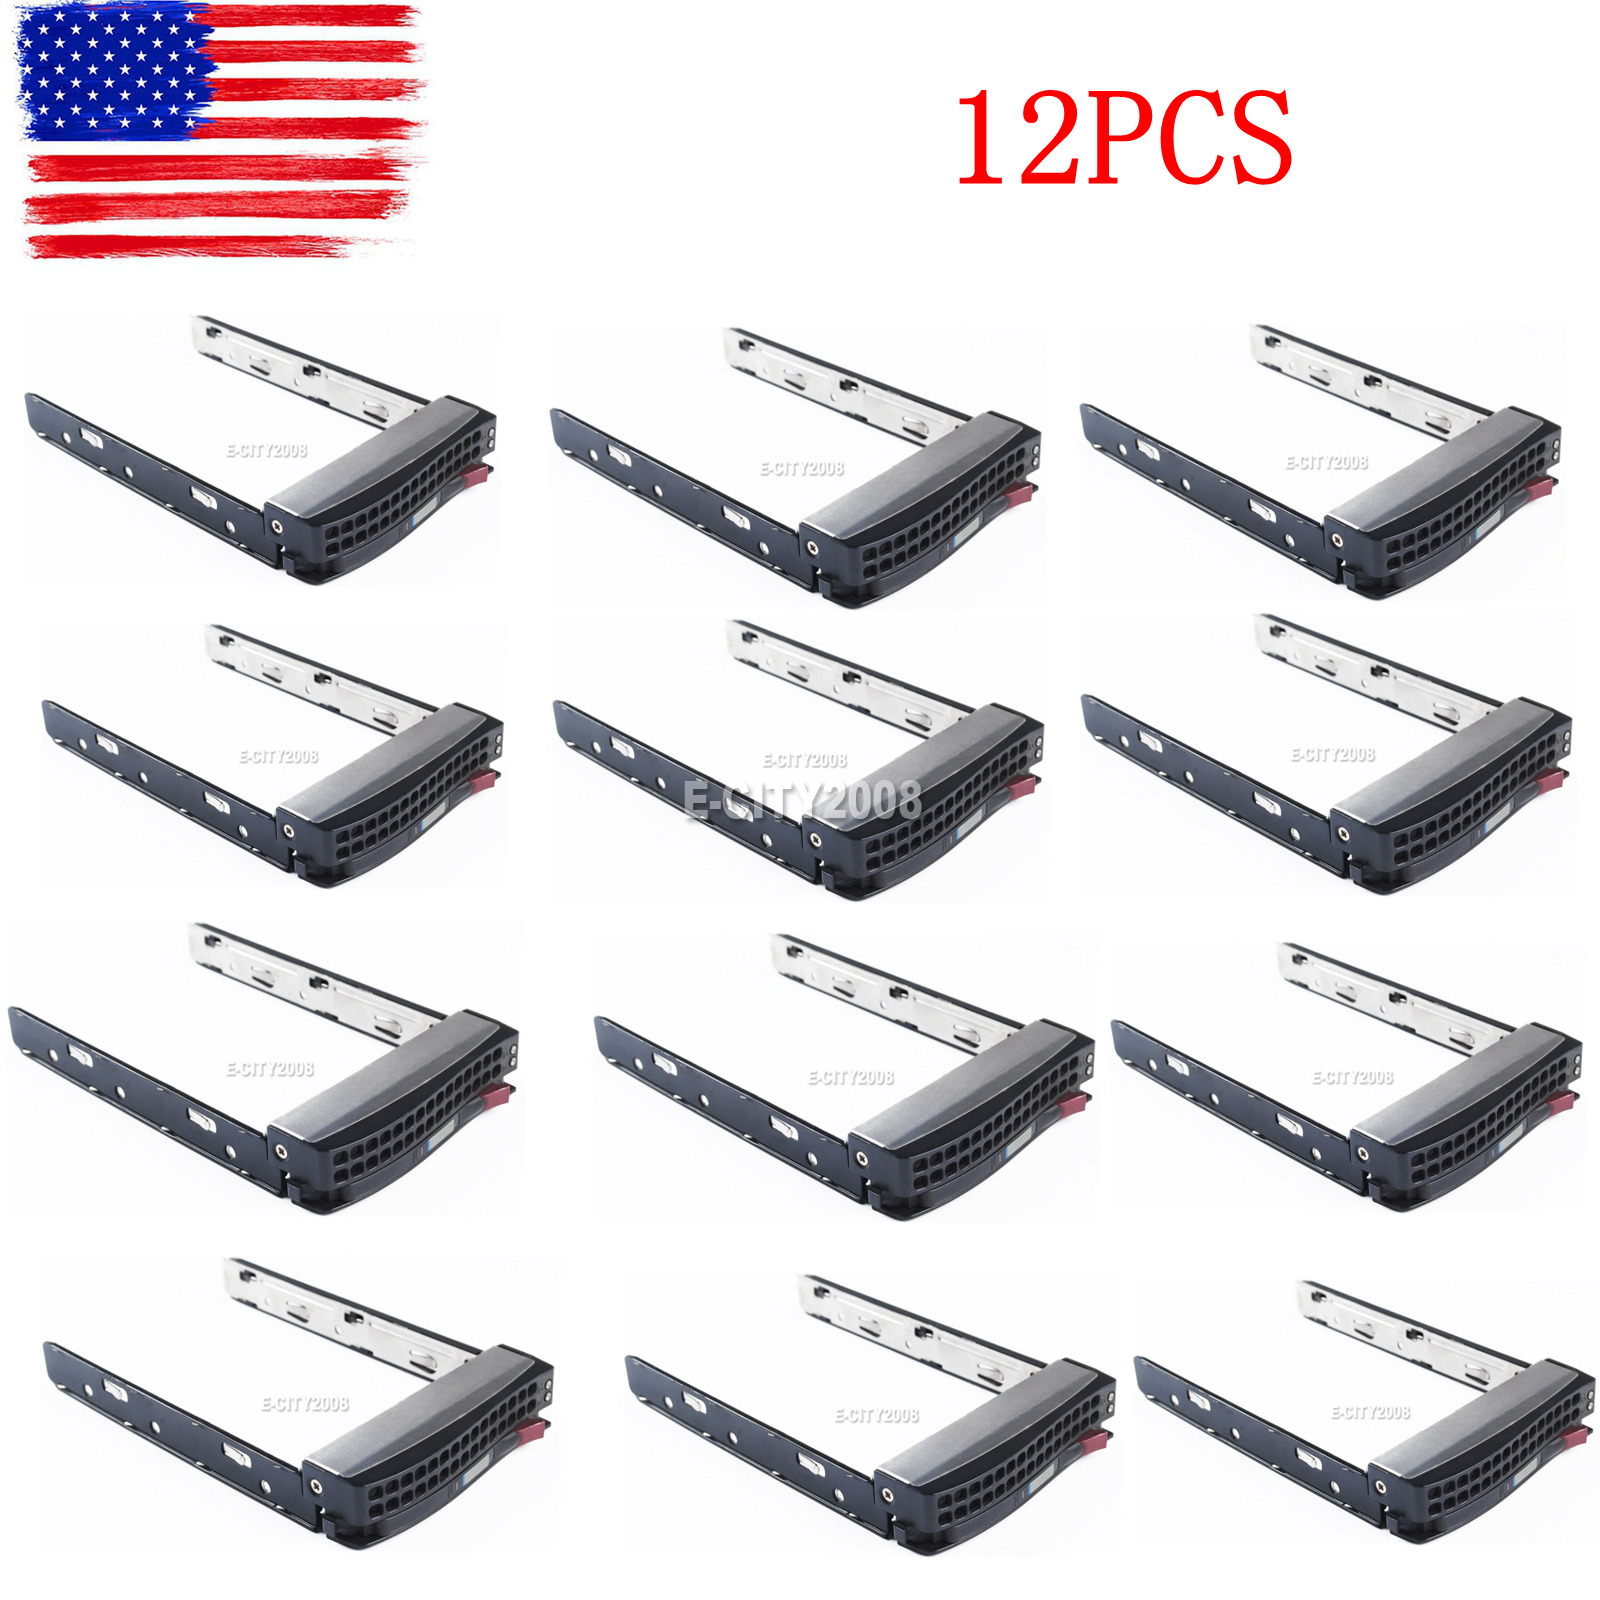 Lot of 12PCS Supermicro 3.5” Hard Drive Tray MCP-220-00075-0B